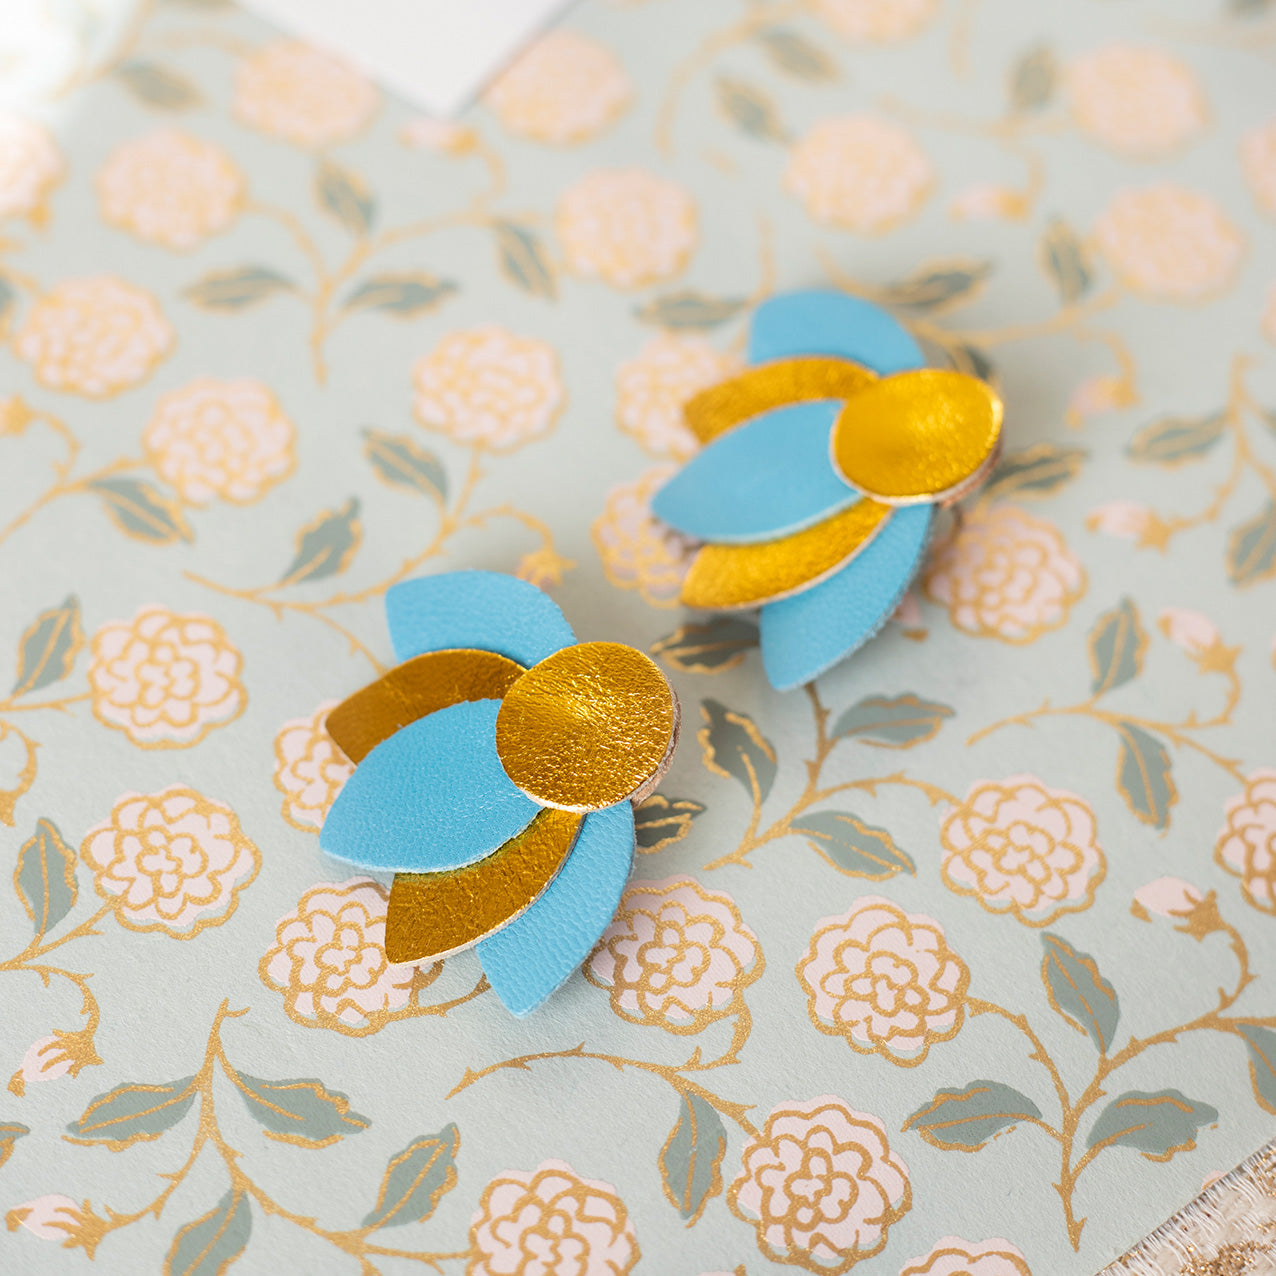 Large Lotus Flower stud earrings - celestial blue and gold